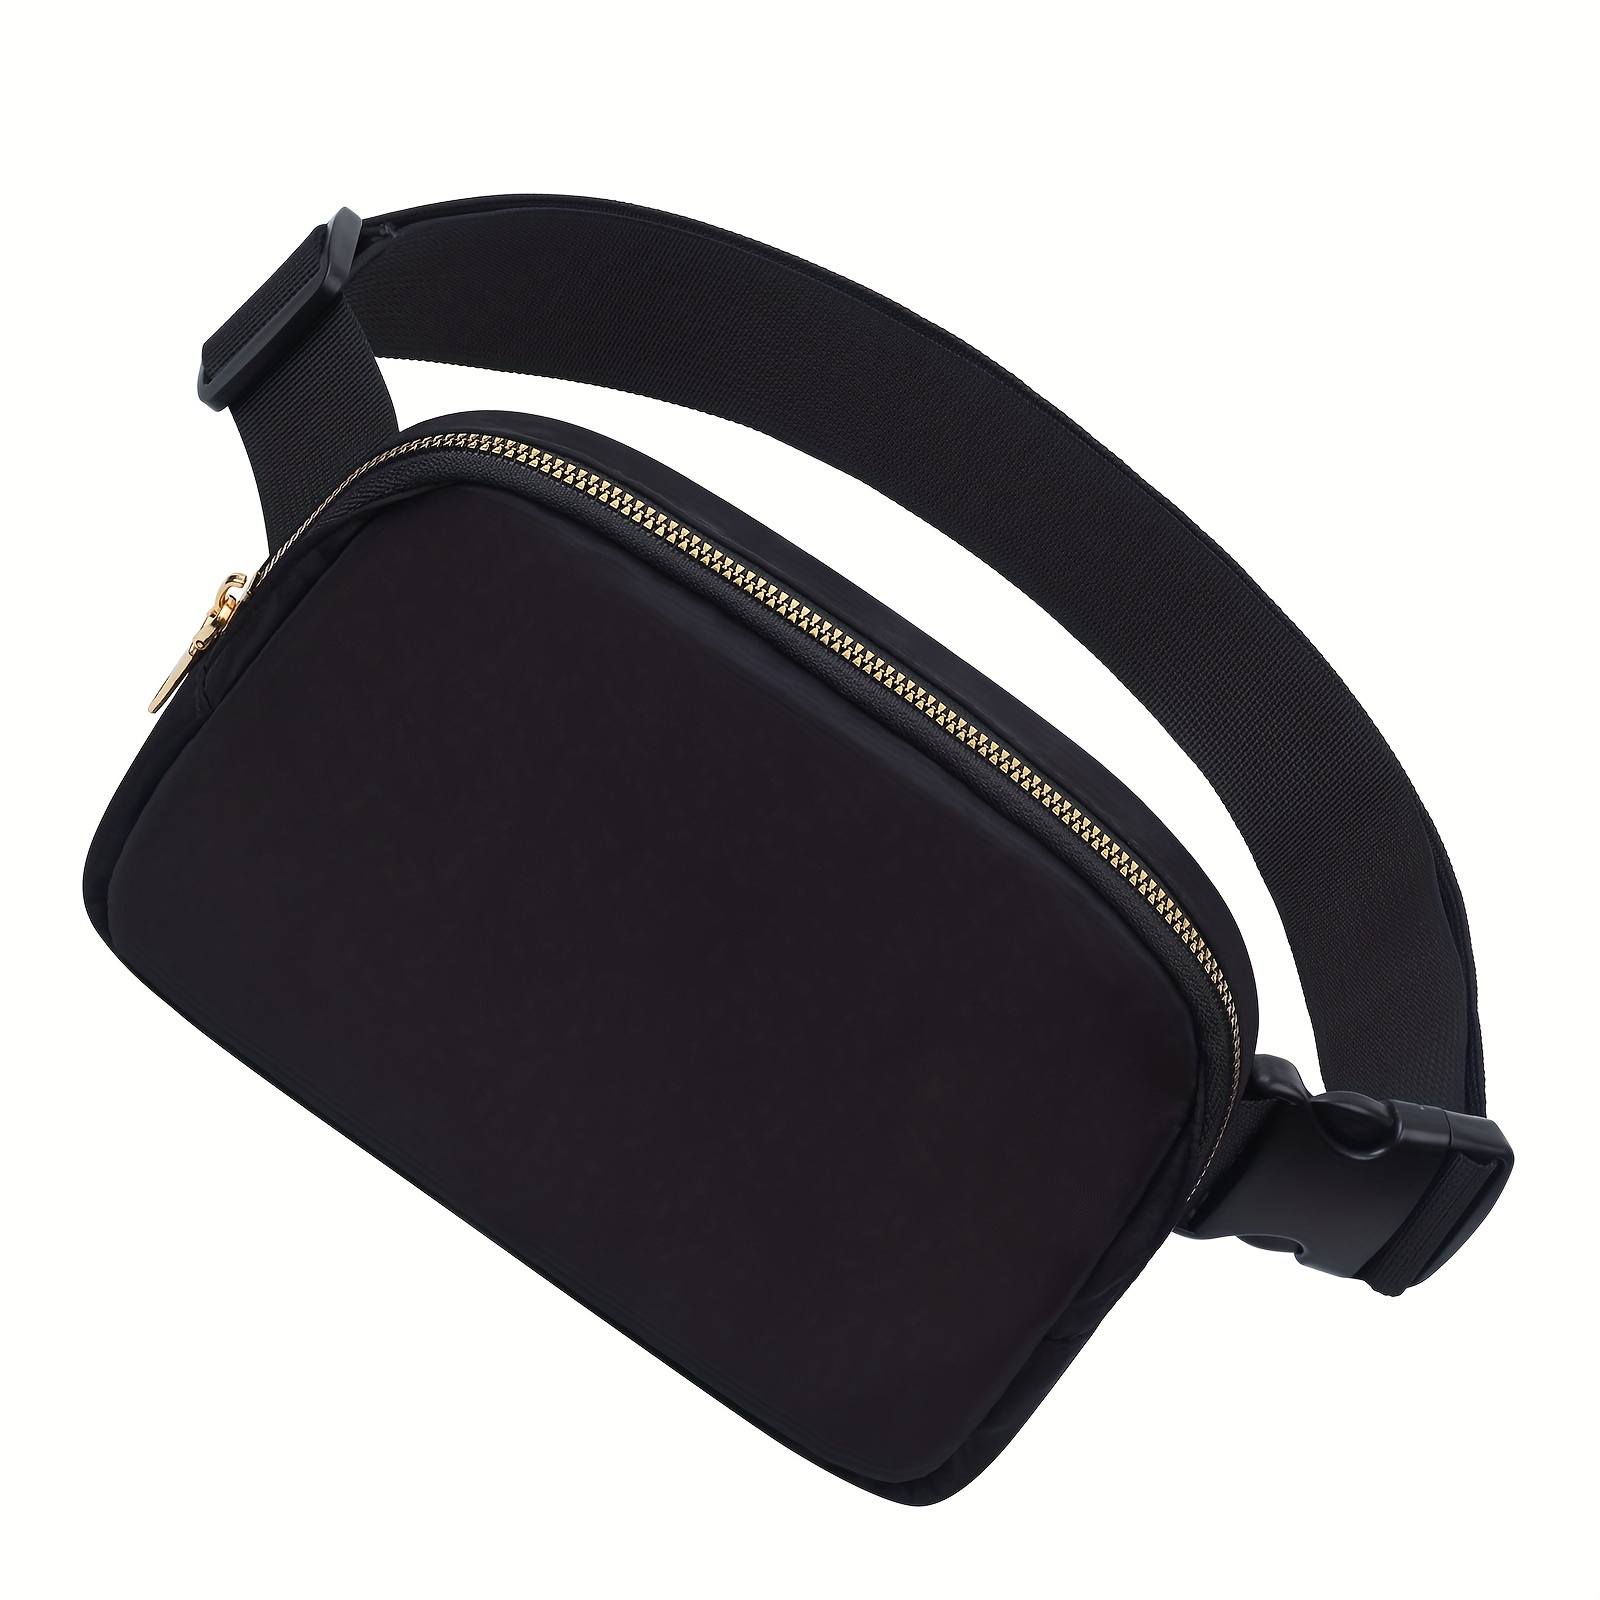 Belt bag Fanny pack crossbody bags for women Everywhere belt bag Waist  packs with 3 Pockets (black)